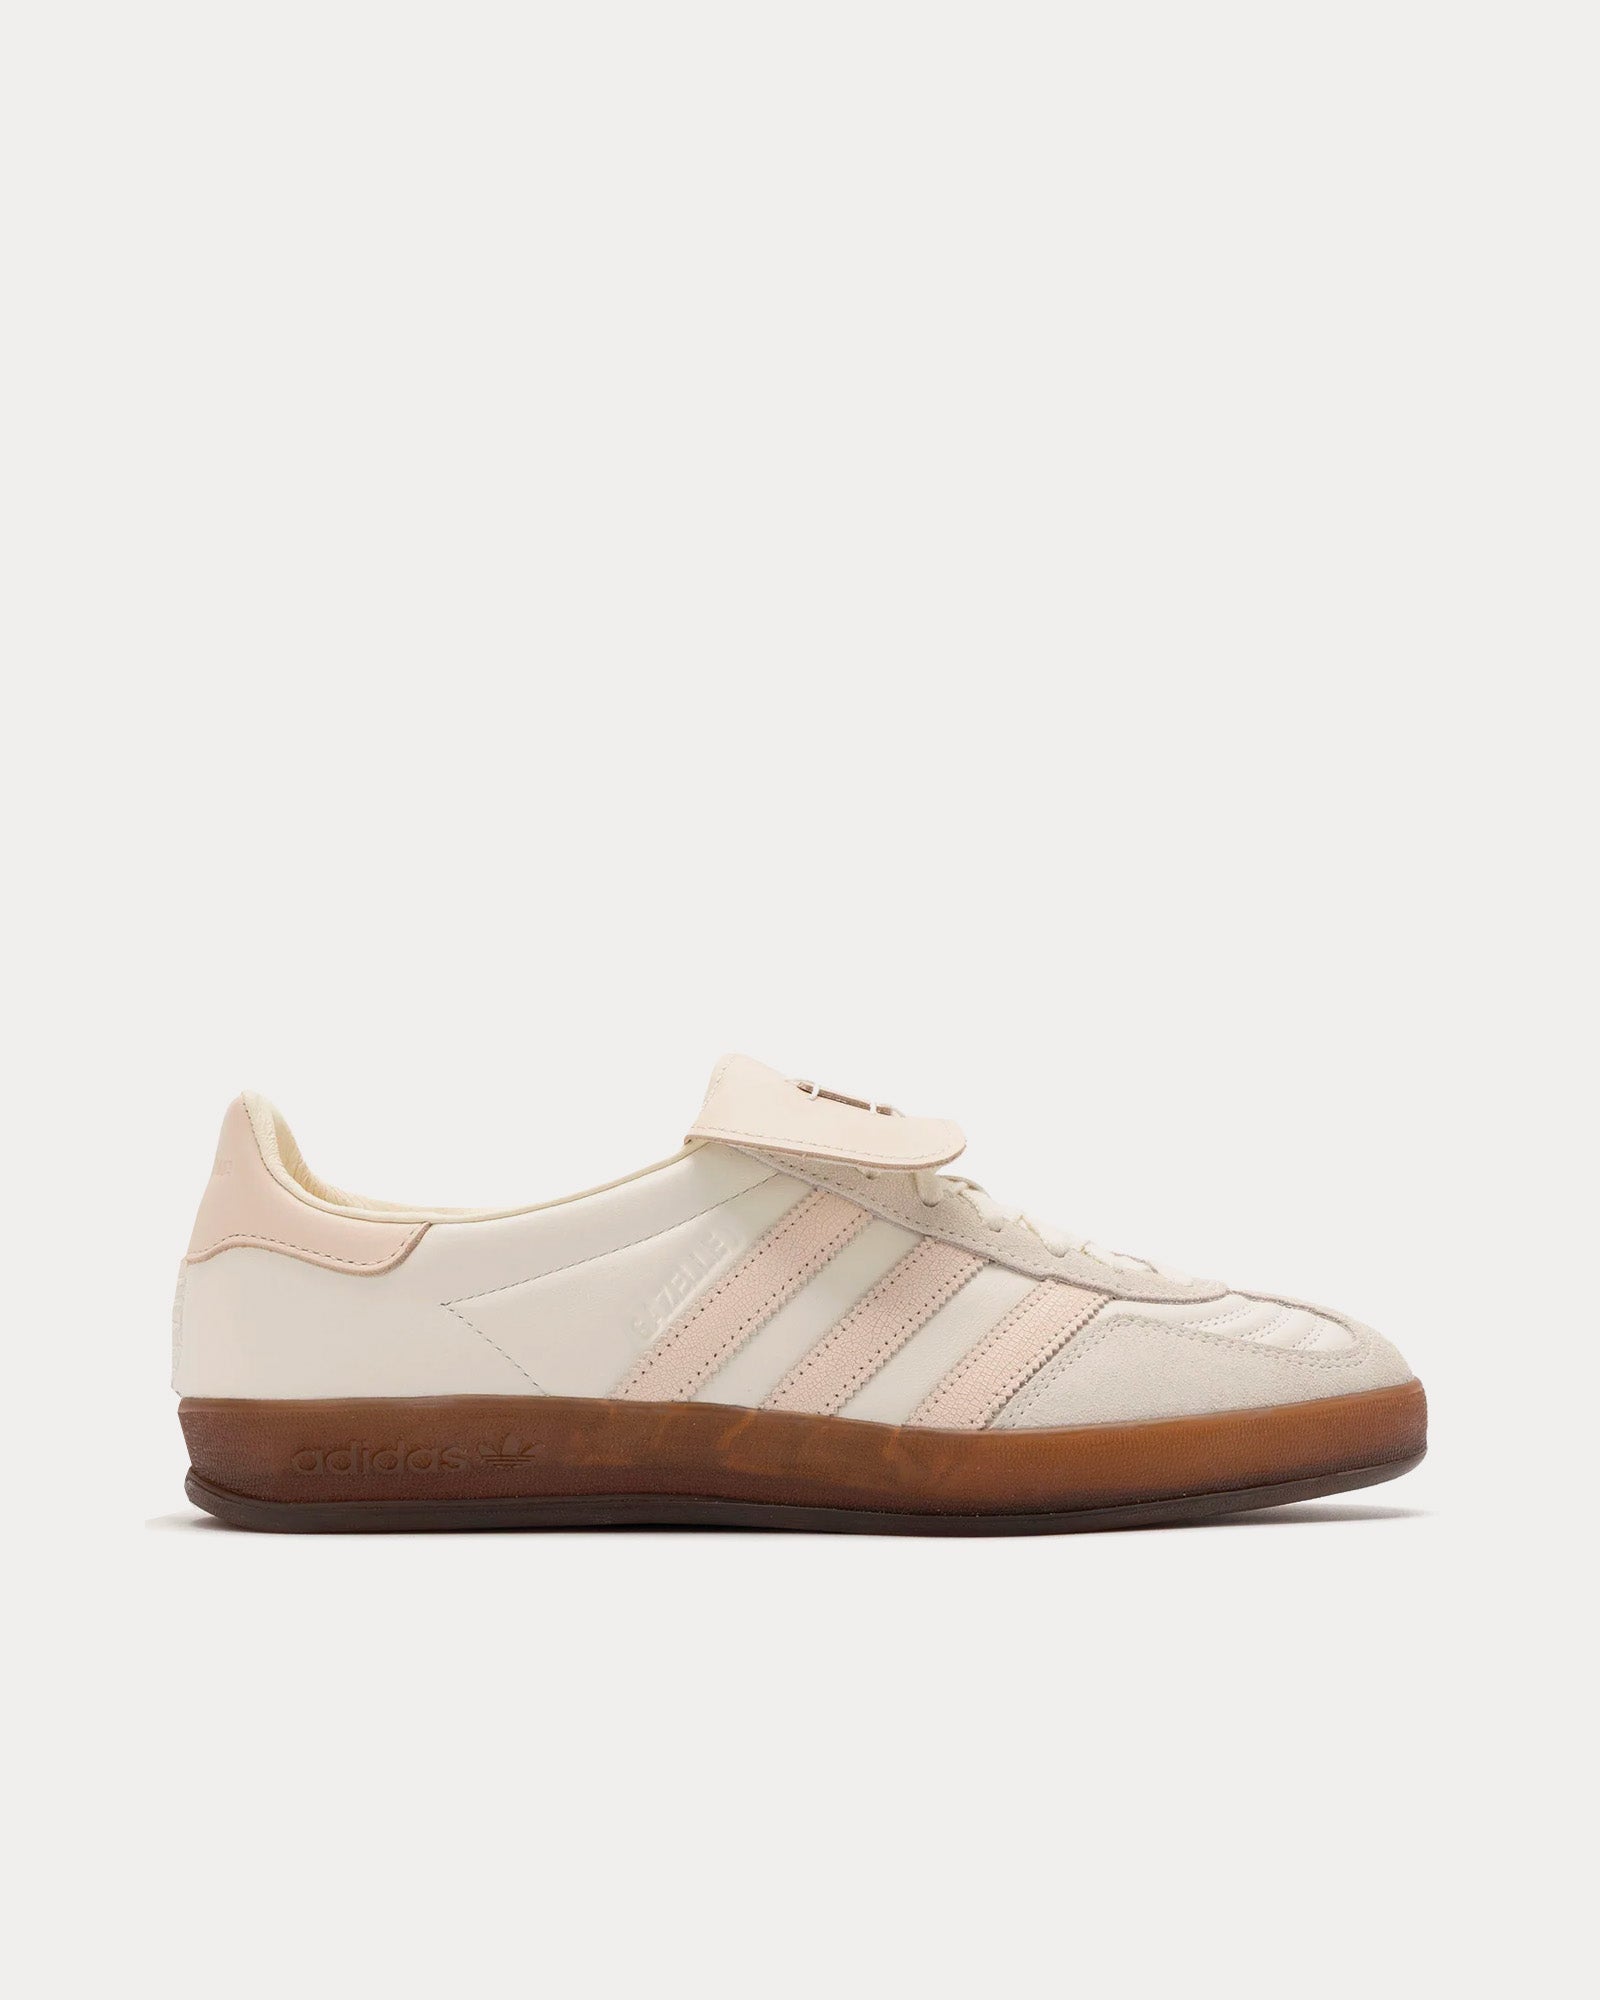 Adidas x Foot Industry - Gazelle Indoor Cream White Low Top Sneakers